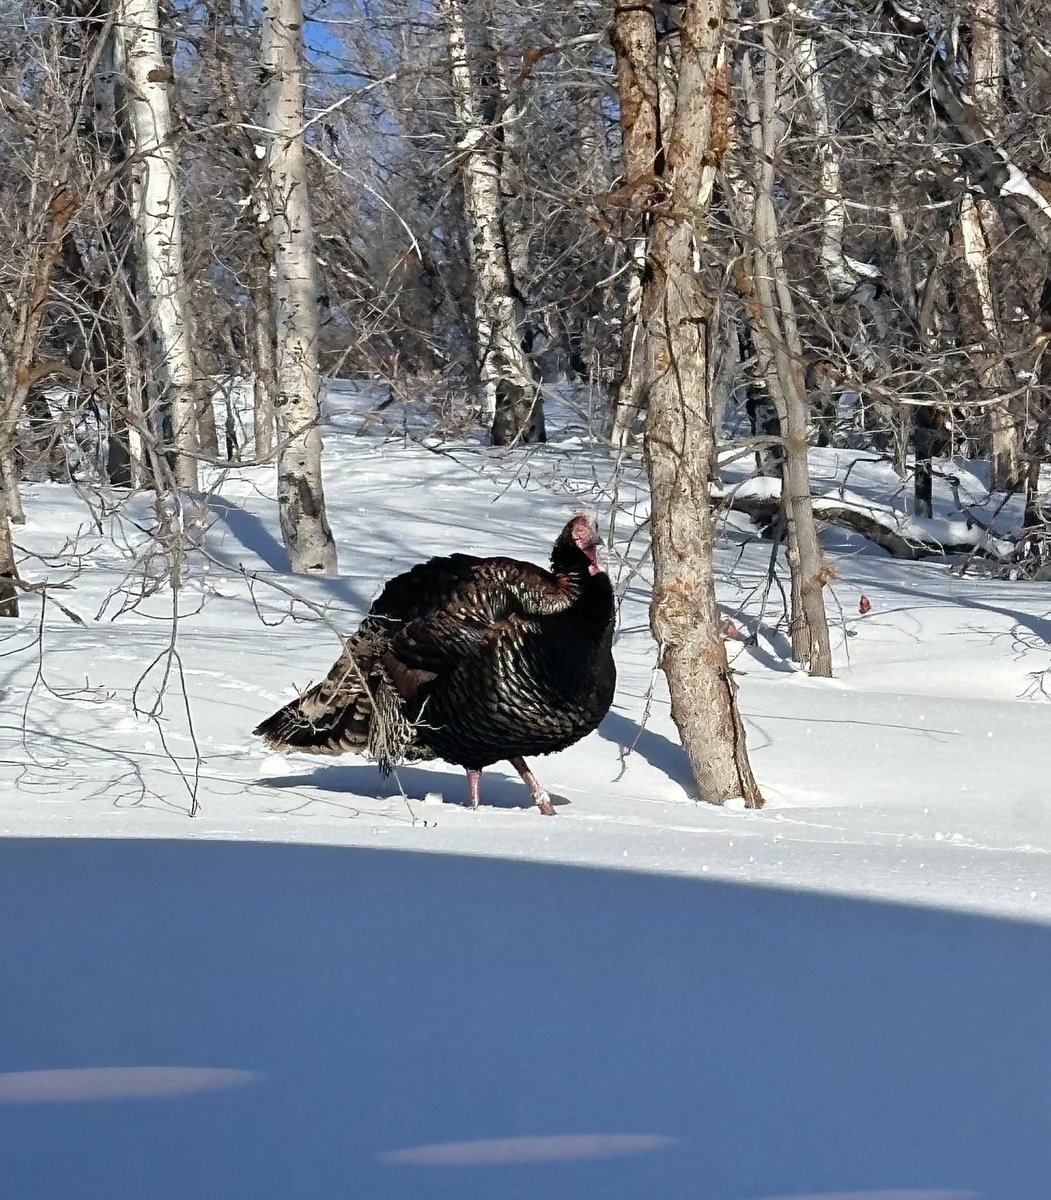 Good looking turkey in the back yard today. #wildlife #parkcity #utah